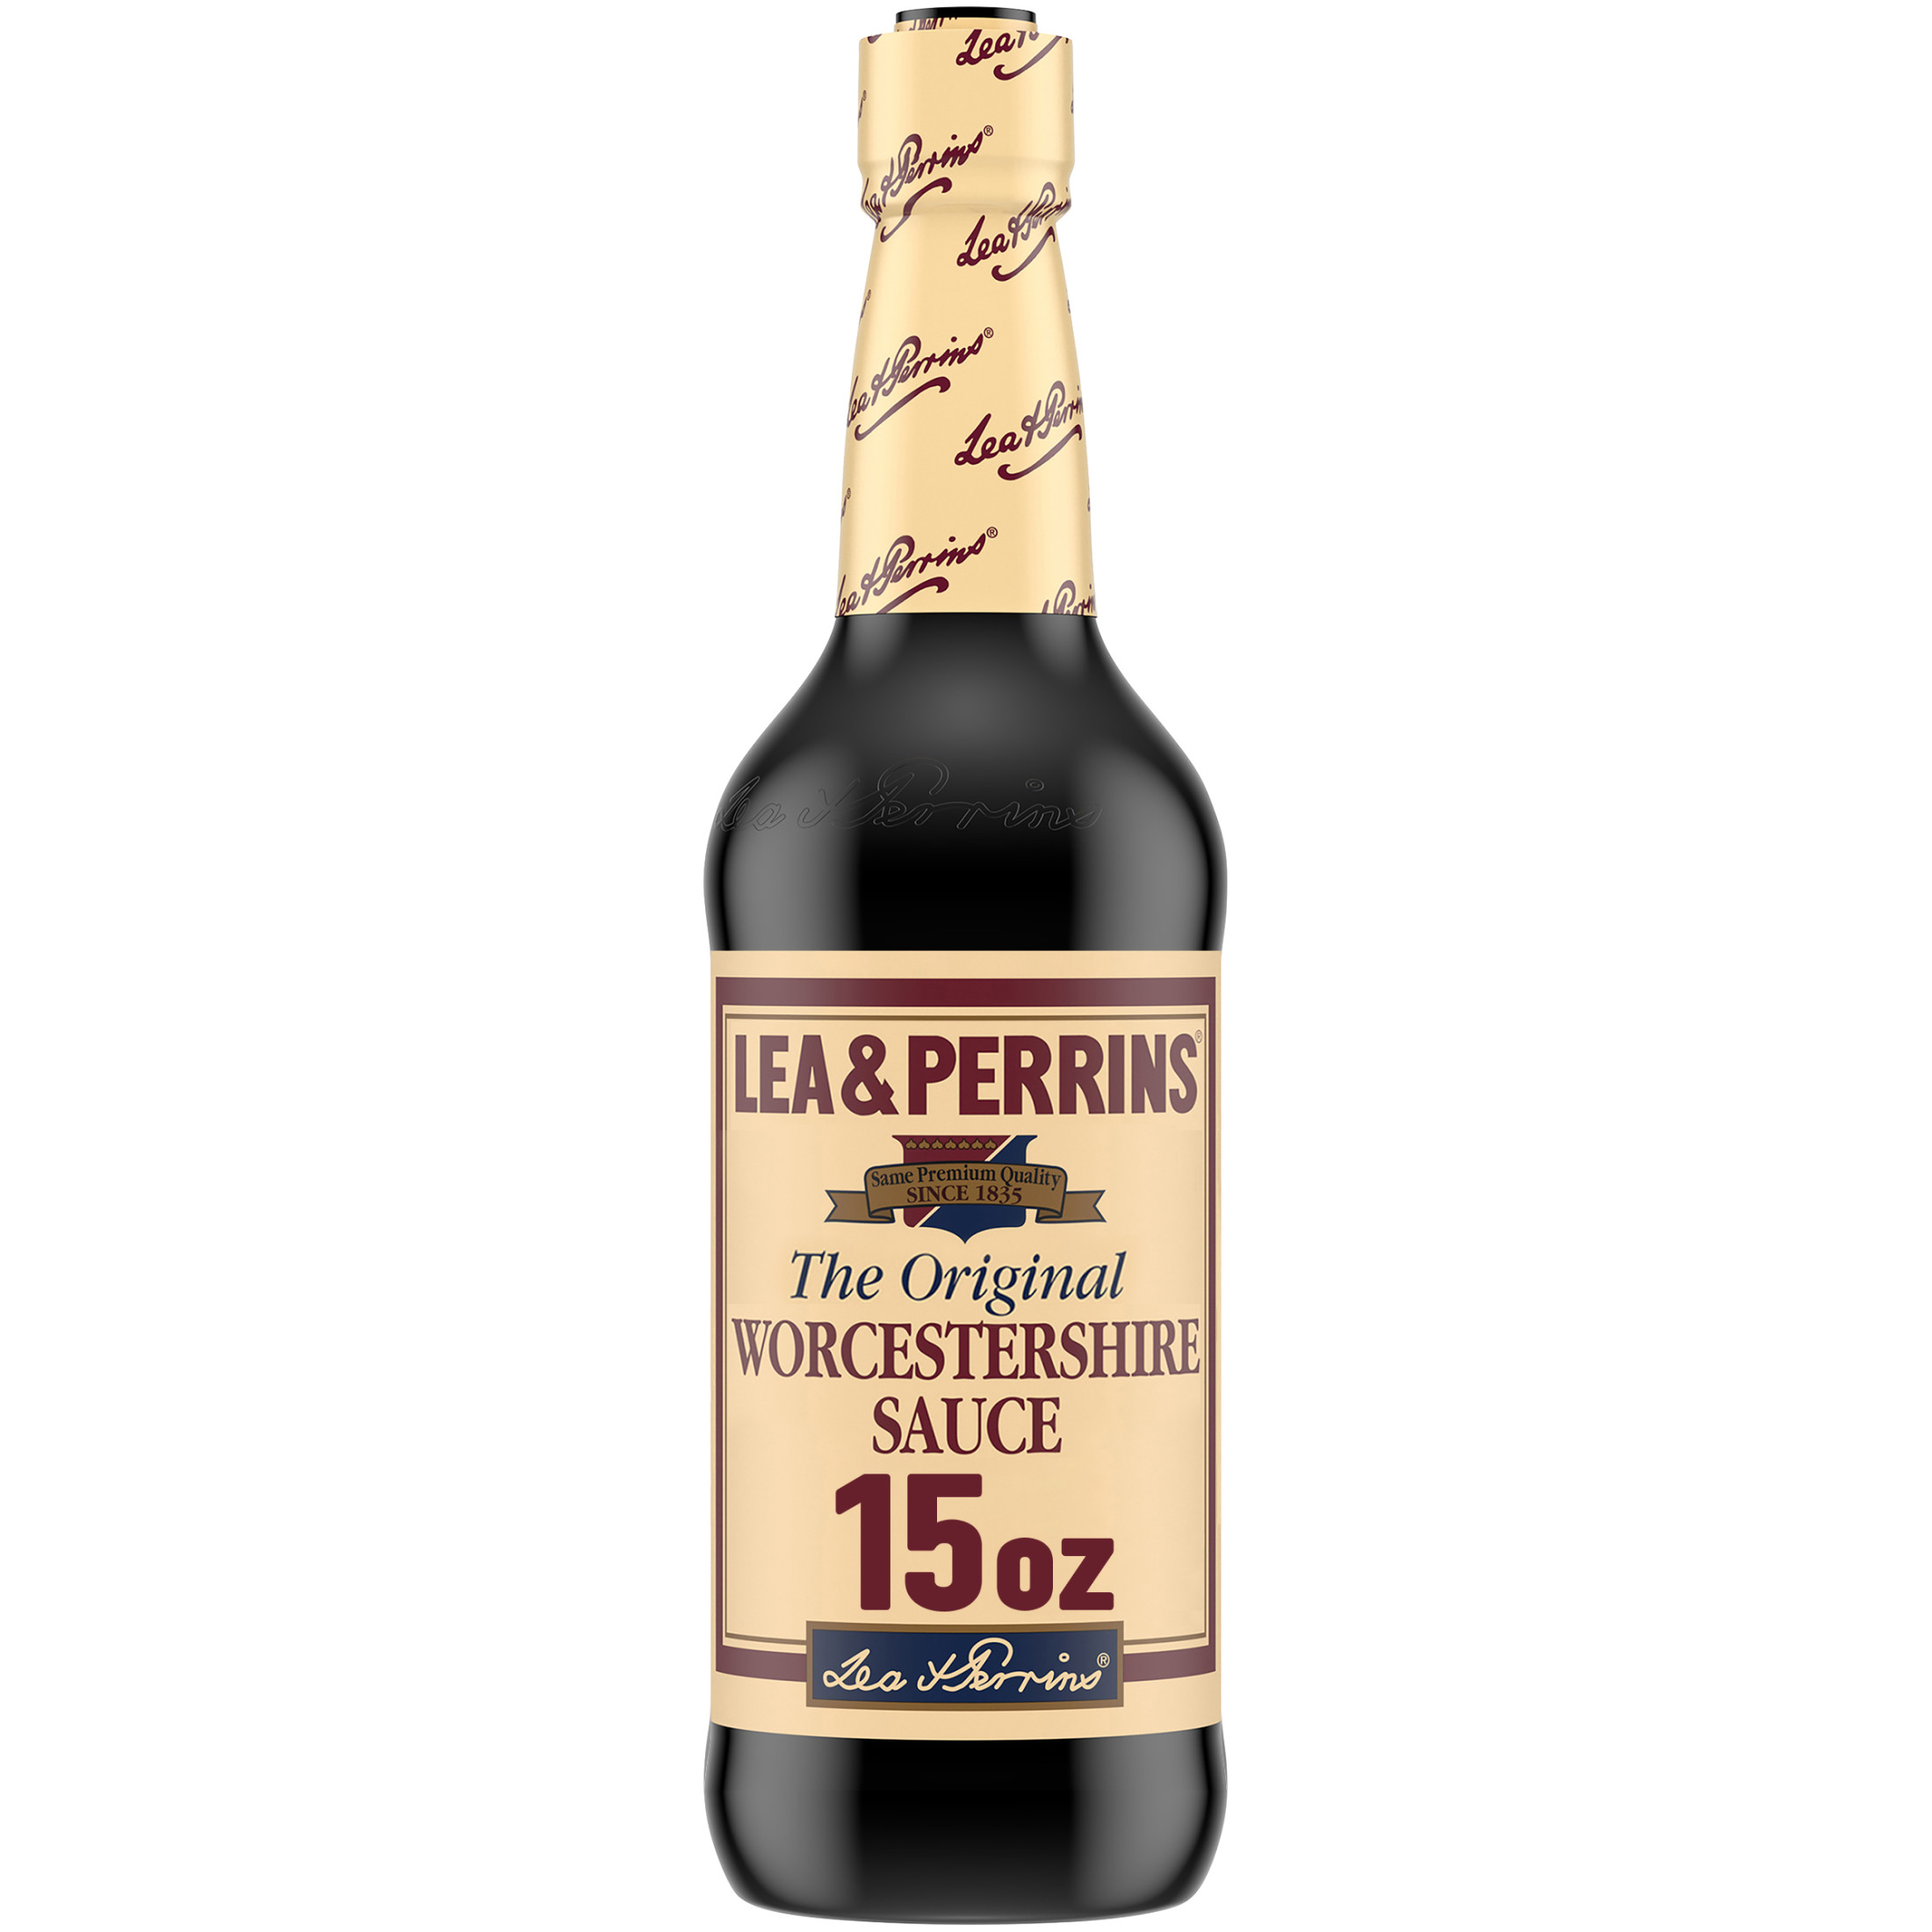 Lea & Perrins The Original Worcestershire Sauce, 15 fl oz Bottle - image 1 of 13